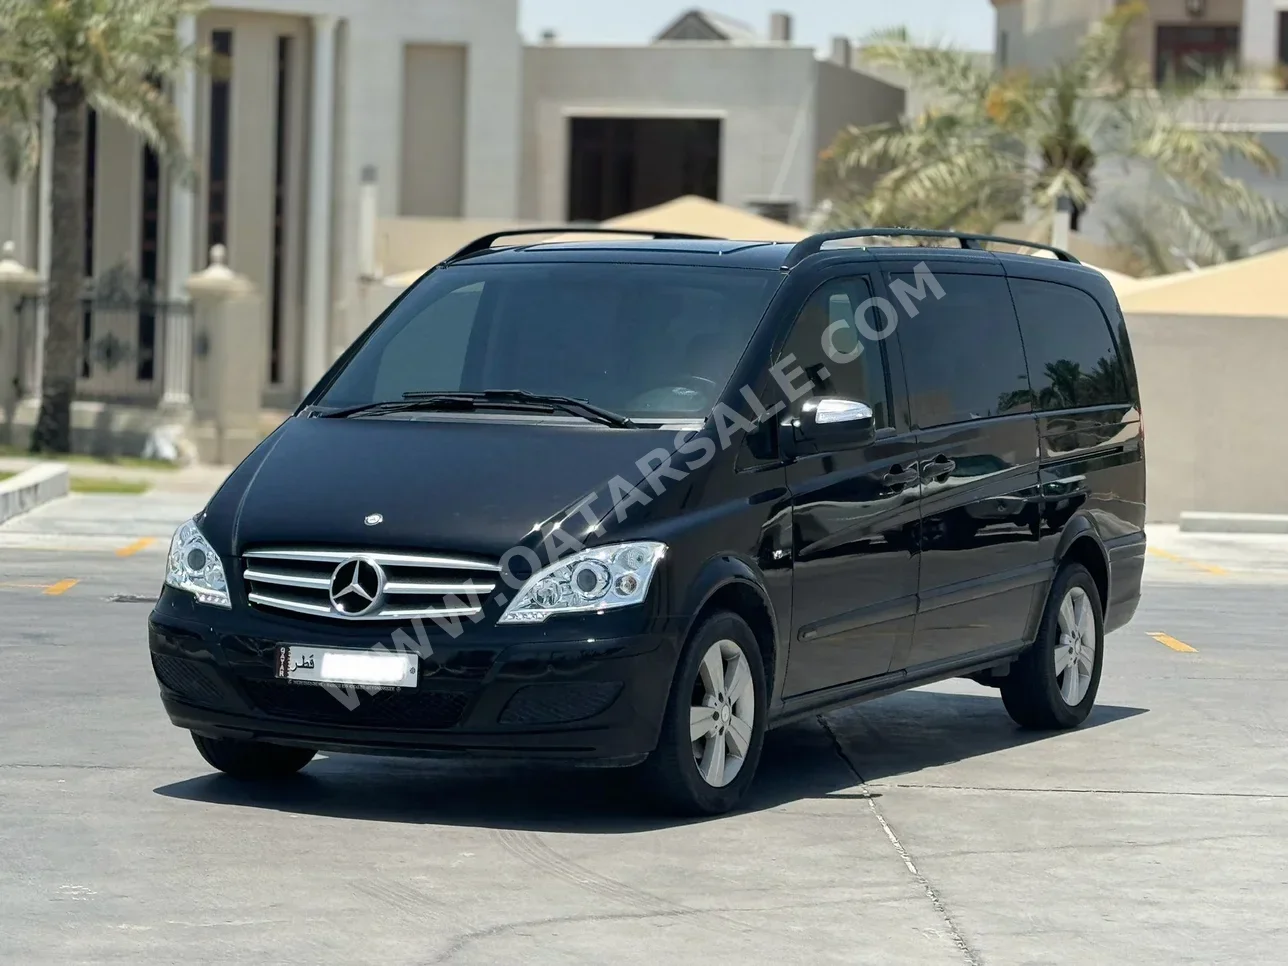 Mercedes-Benz  Viano  2014  Automatic  10,000 Km  6 Cylinder  Rear Wheel Drive (RWD)  Van / Bus  Black